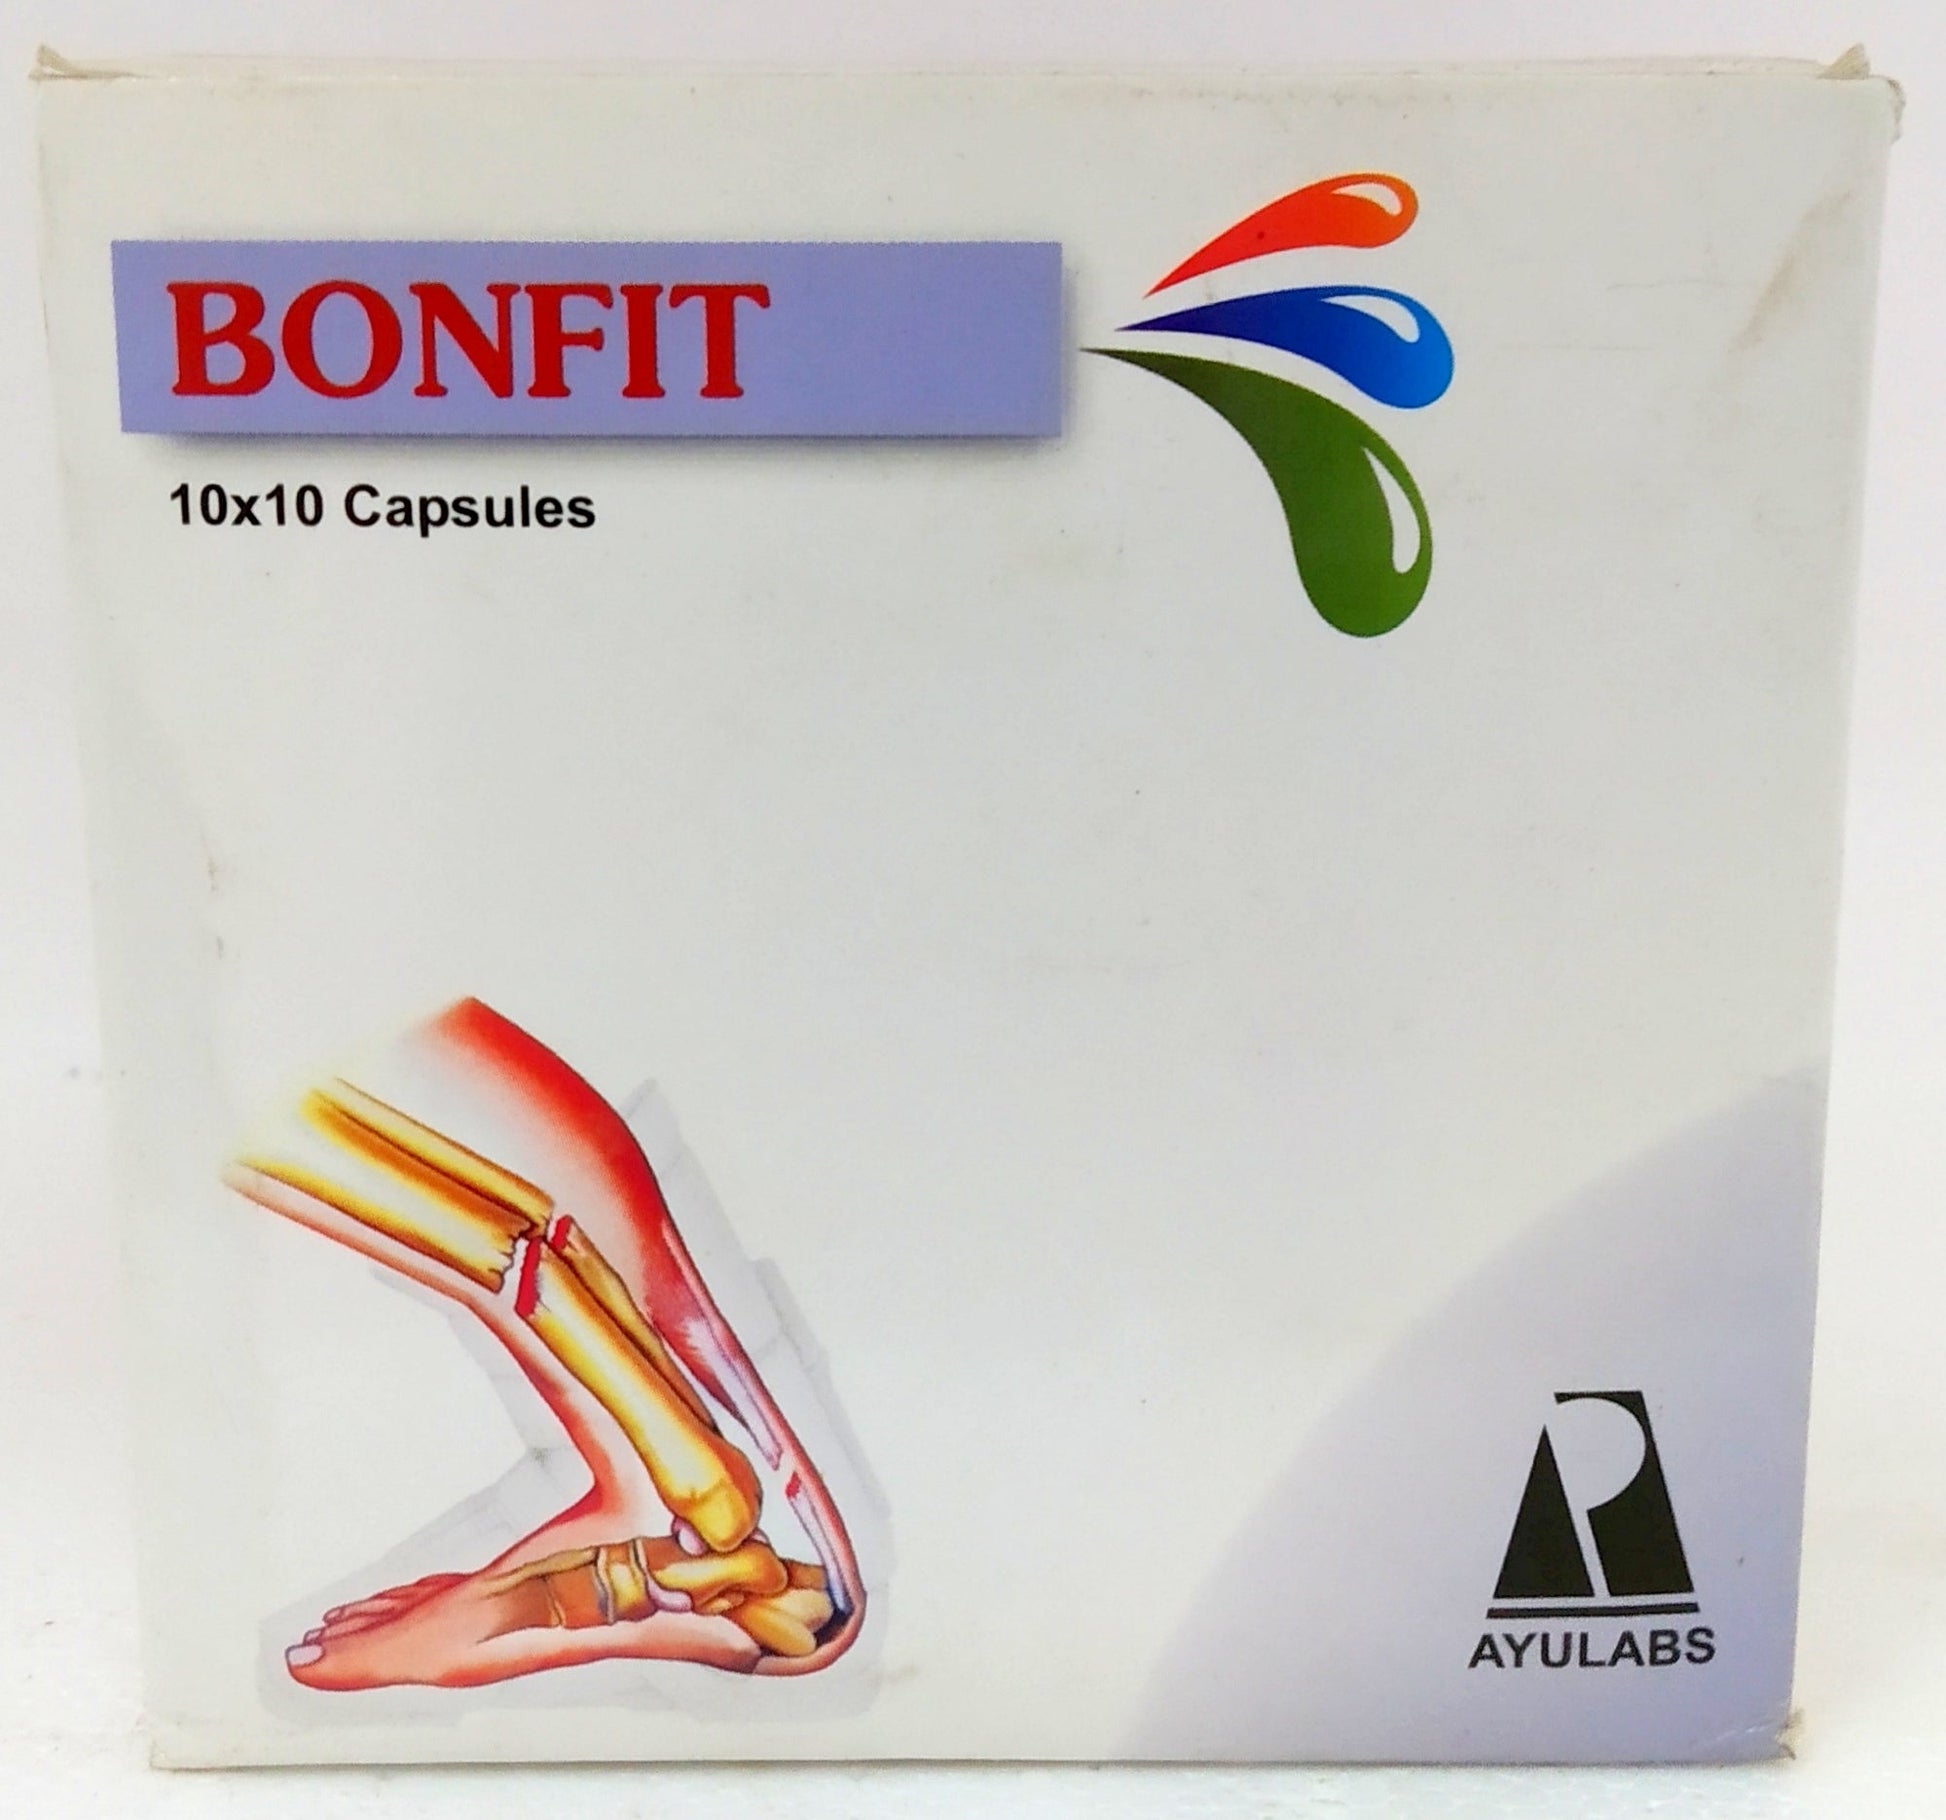 Bonfit 10Capsules -  Ayulabs - Medizzo.com